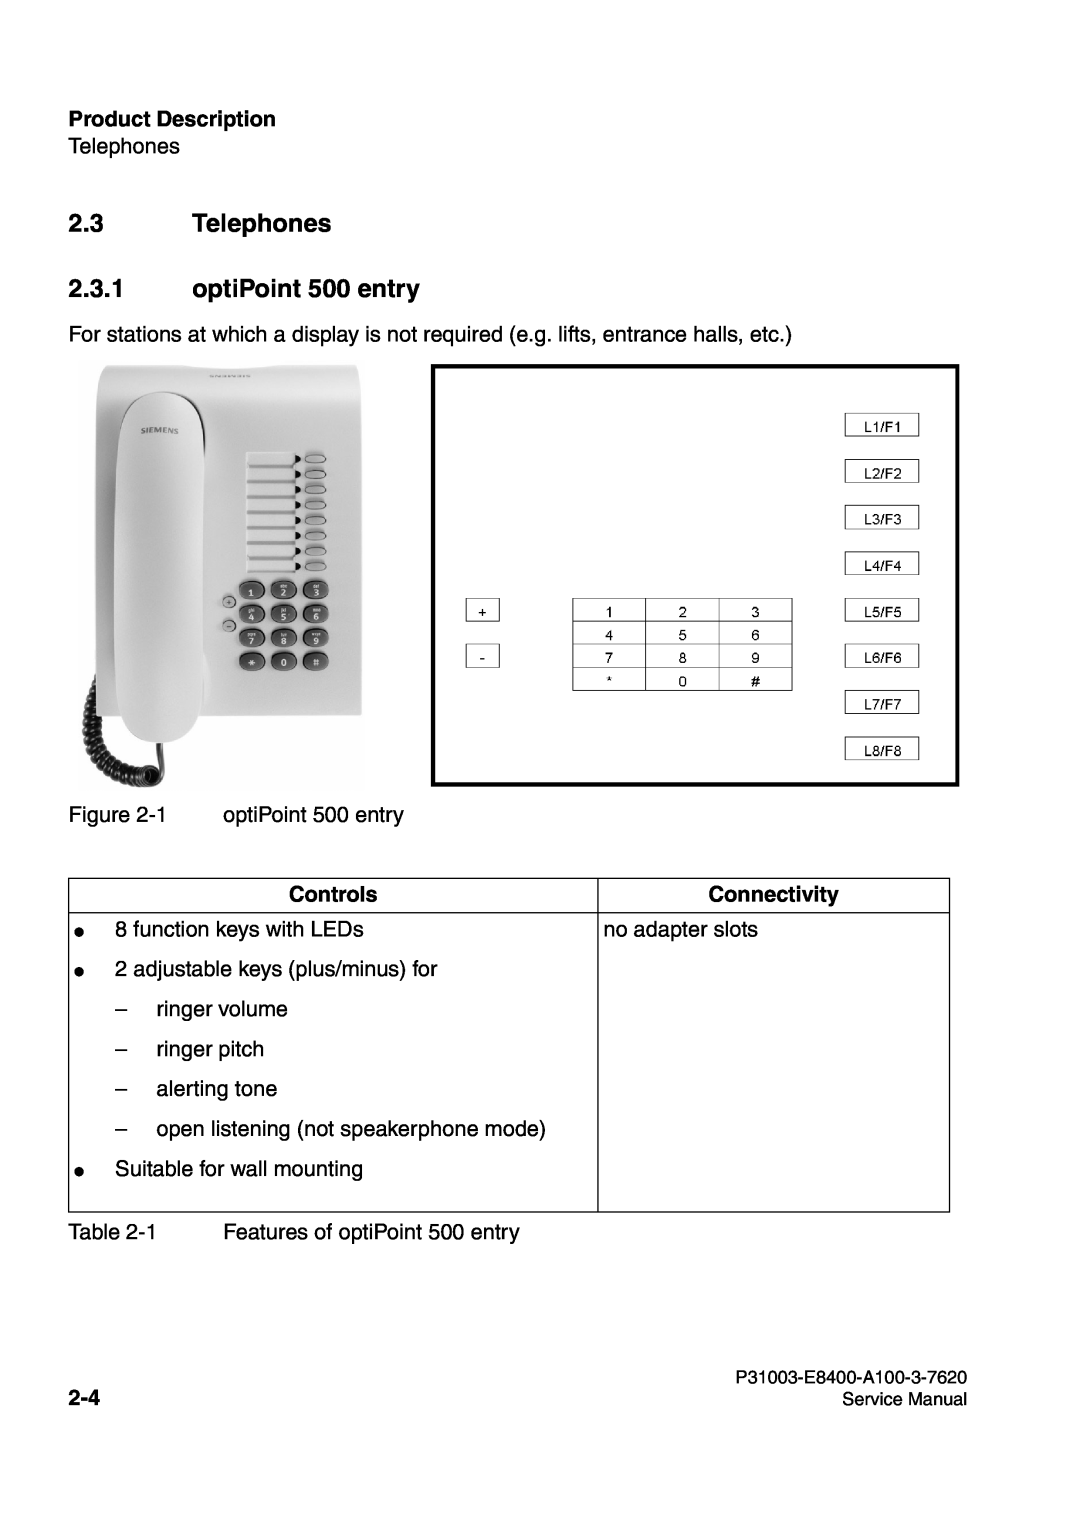 Siemens service manual Telephones 2.3.1 optiPoint 500 entry, Product Description, Controls, Connectivity 